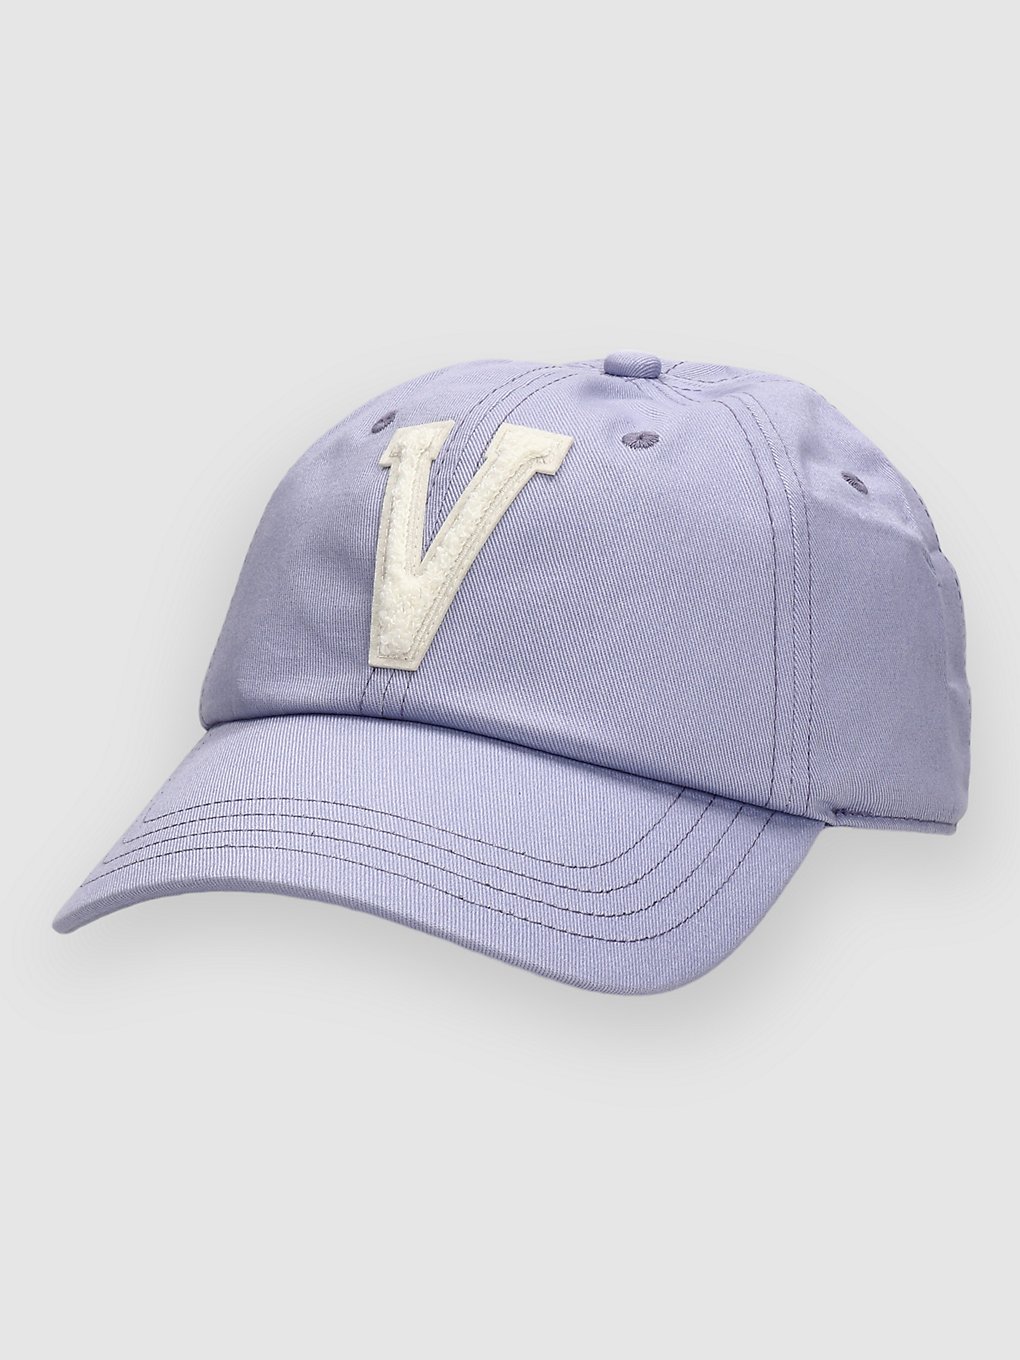 Vans Flying V Cap sweet lavender